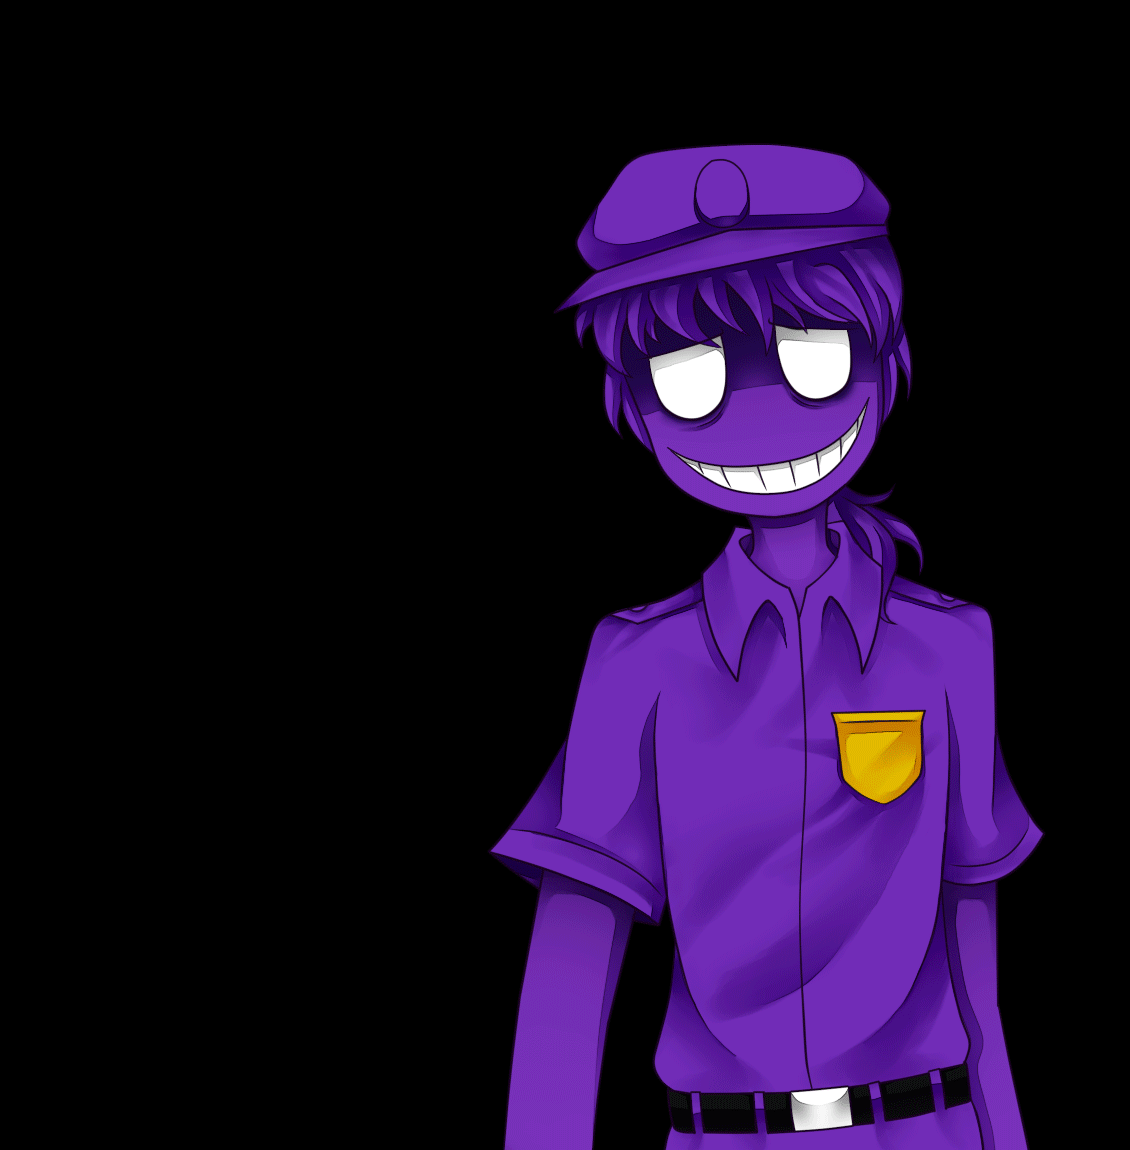 oh hi little drawing of purple guy the design belongs